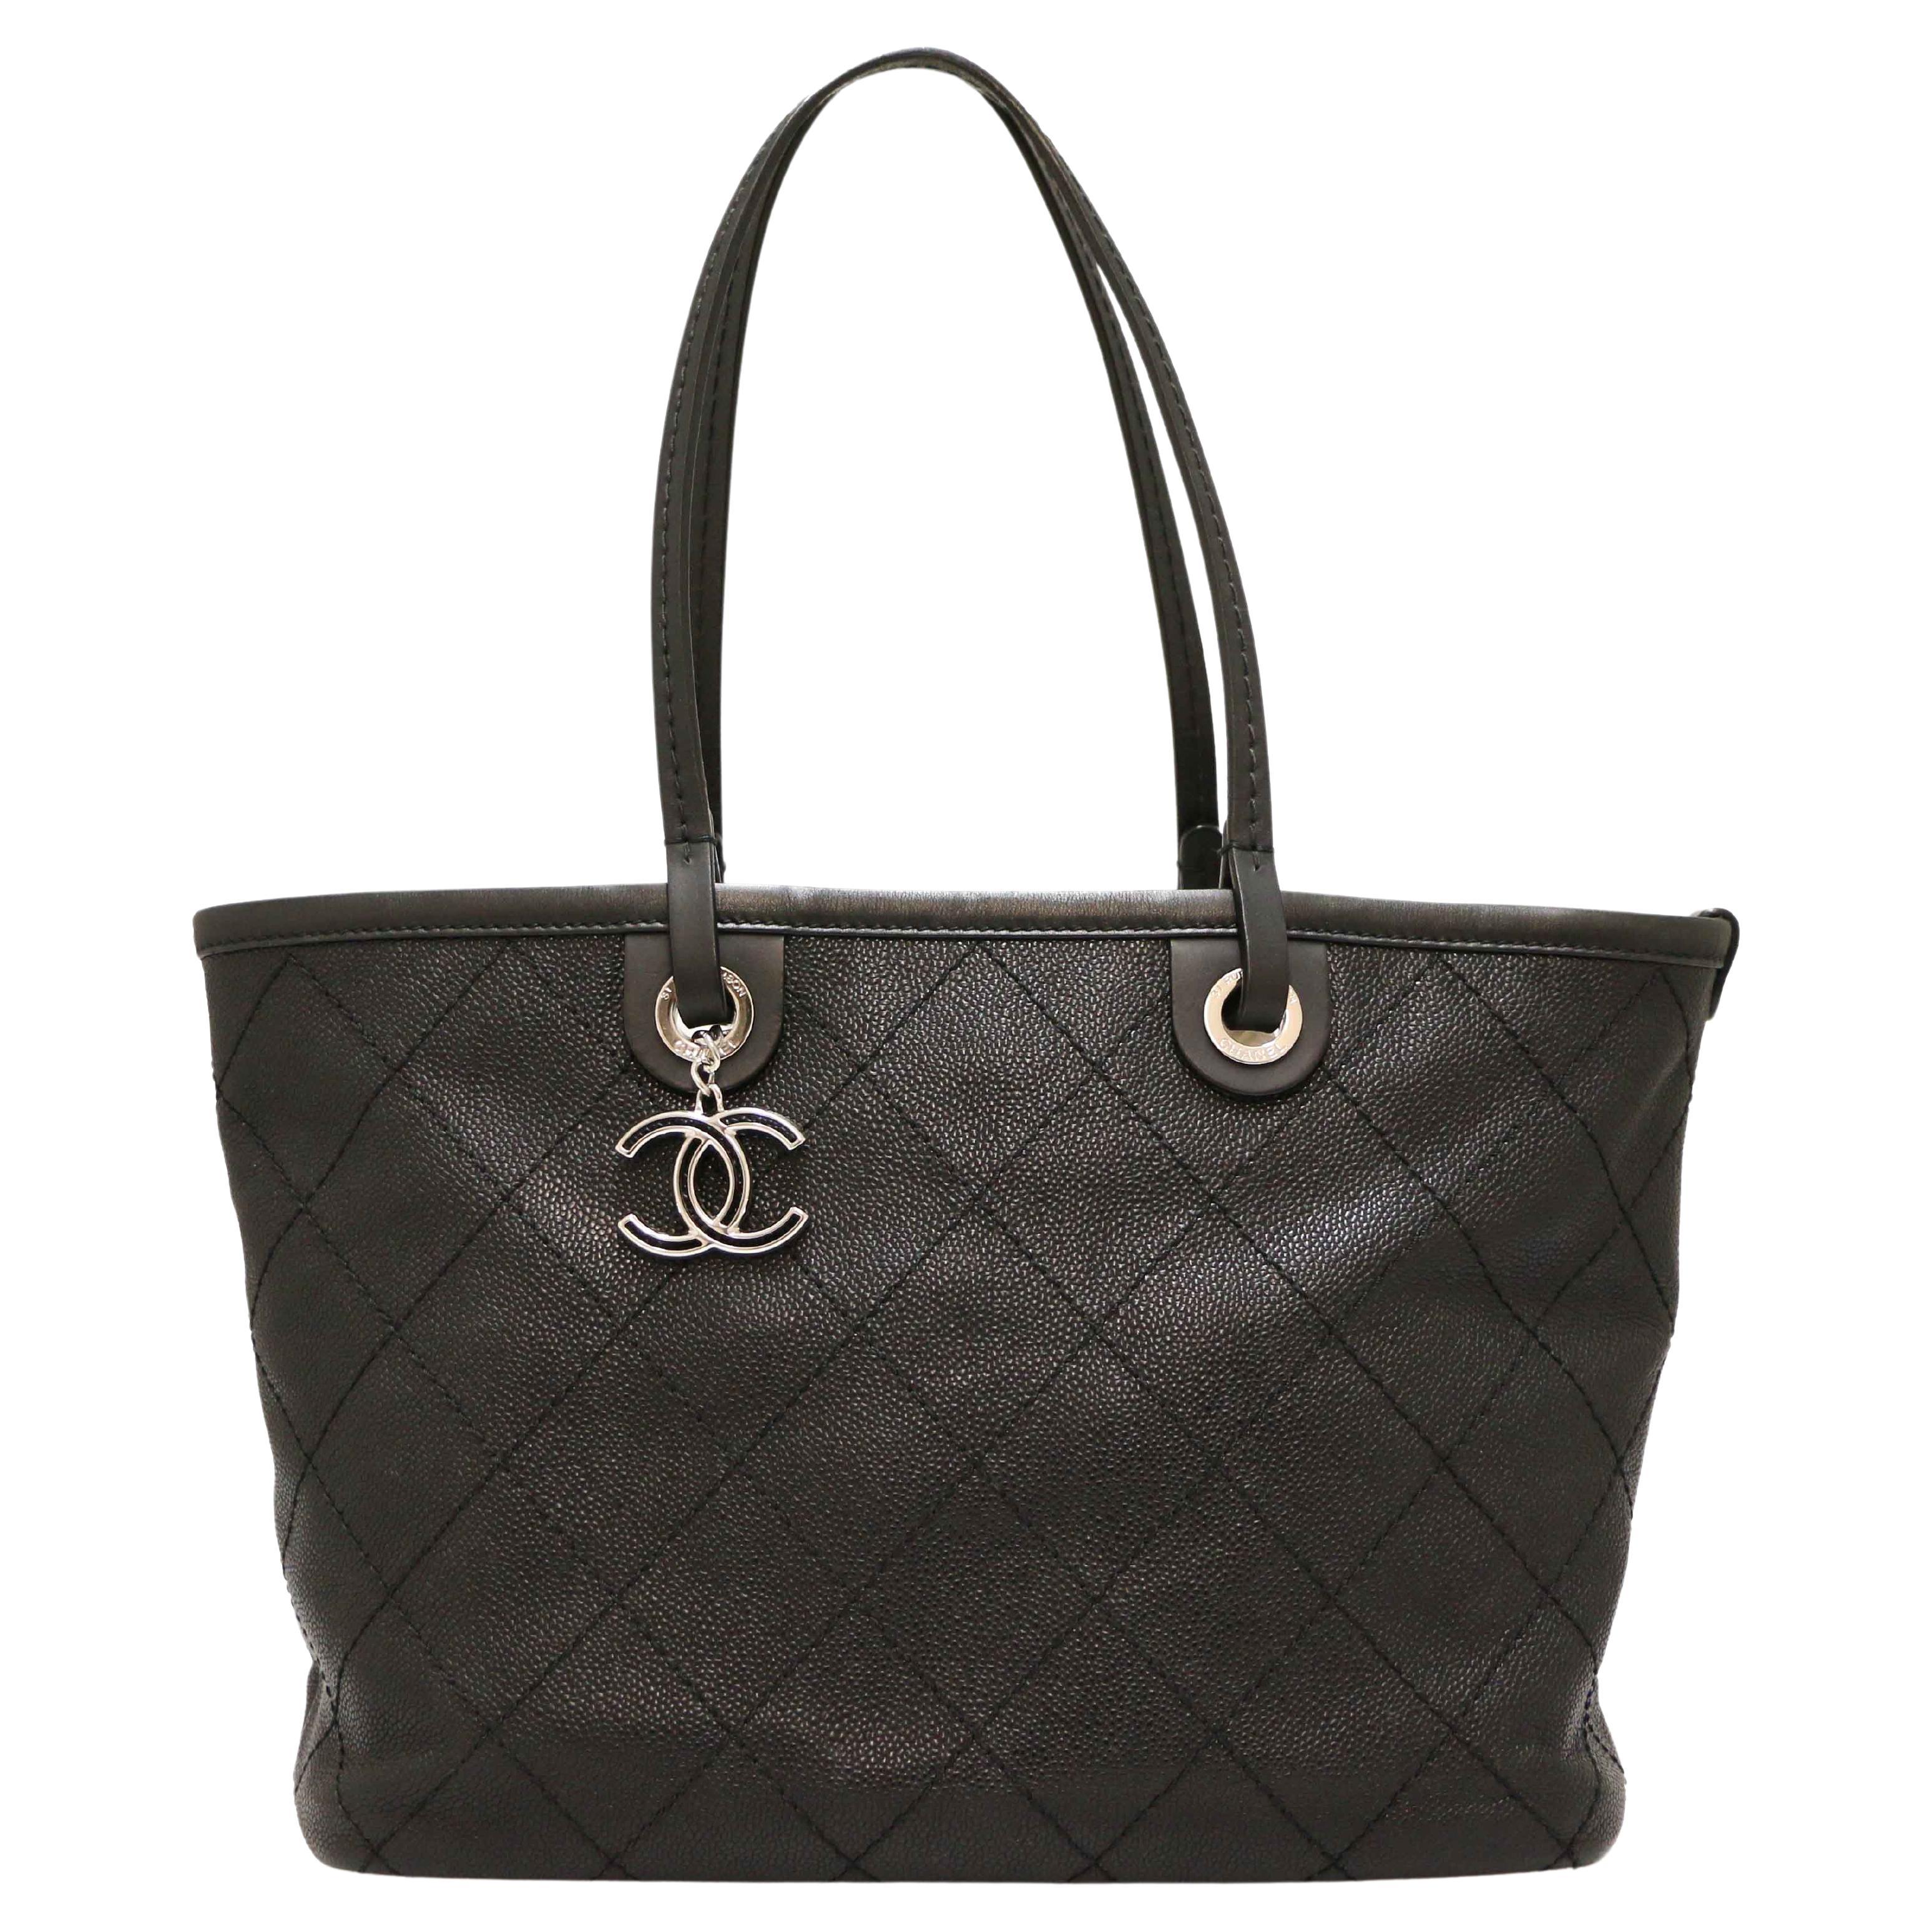 Chanel Black Tote Bag For Sale